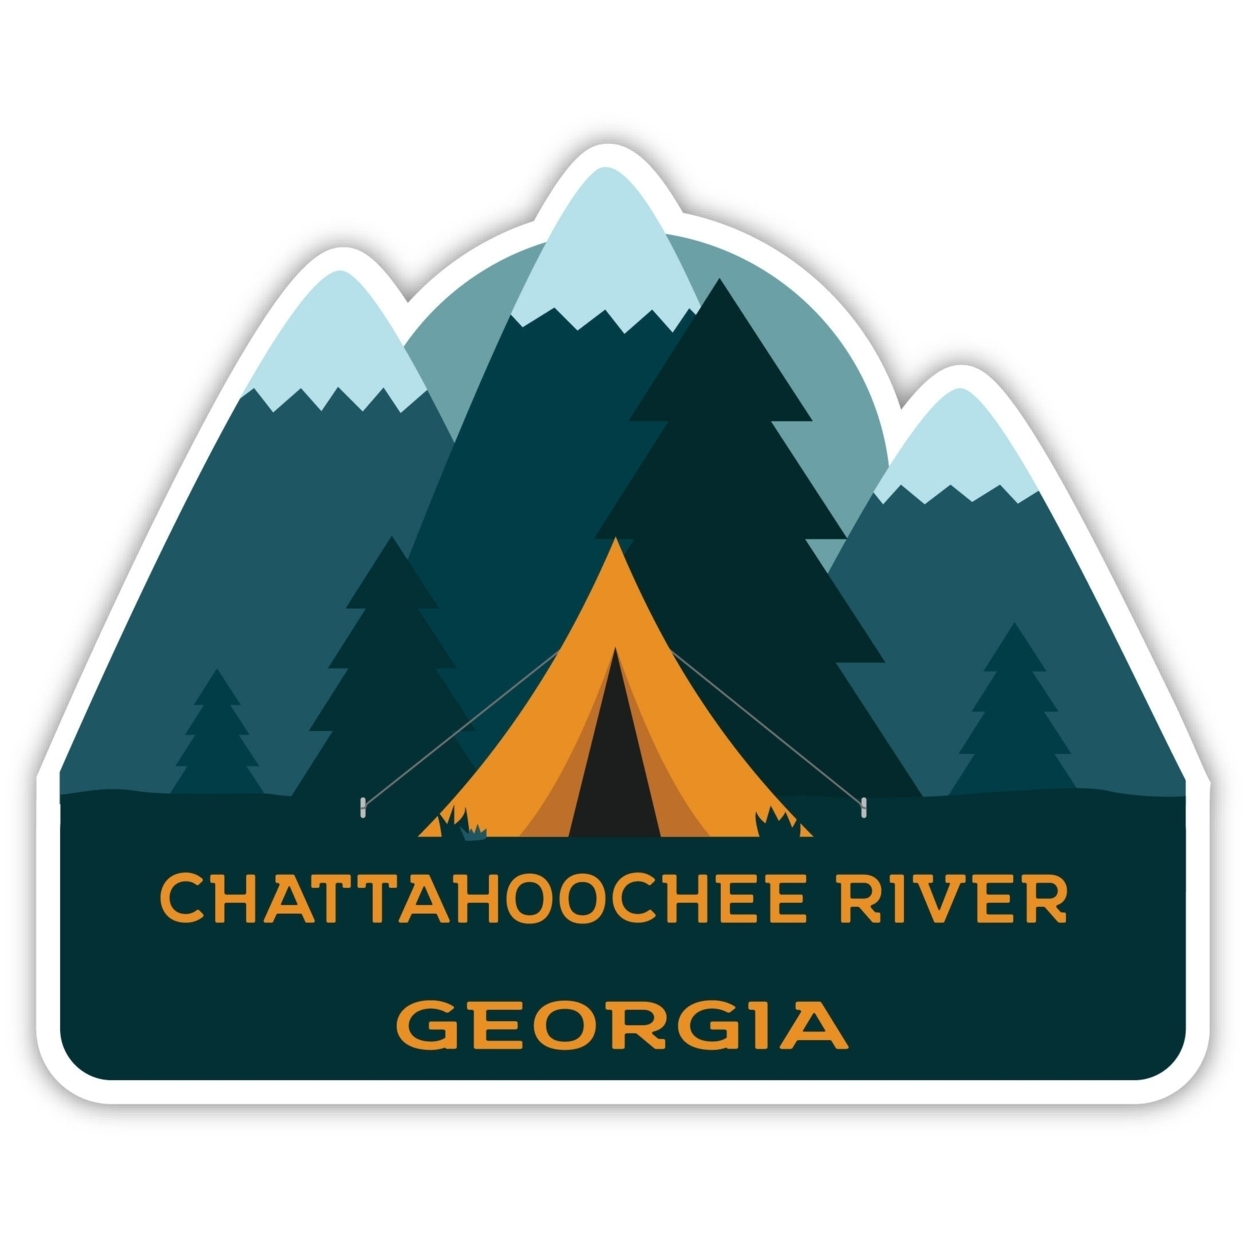 Chattahoochee River Georgia Souvenir Decorative Stickers (Choose Theme And Size) - Single Unit, 6-Inch, Tent